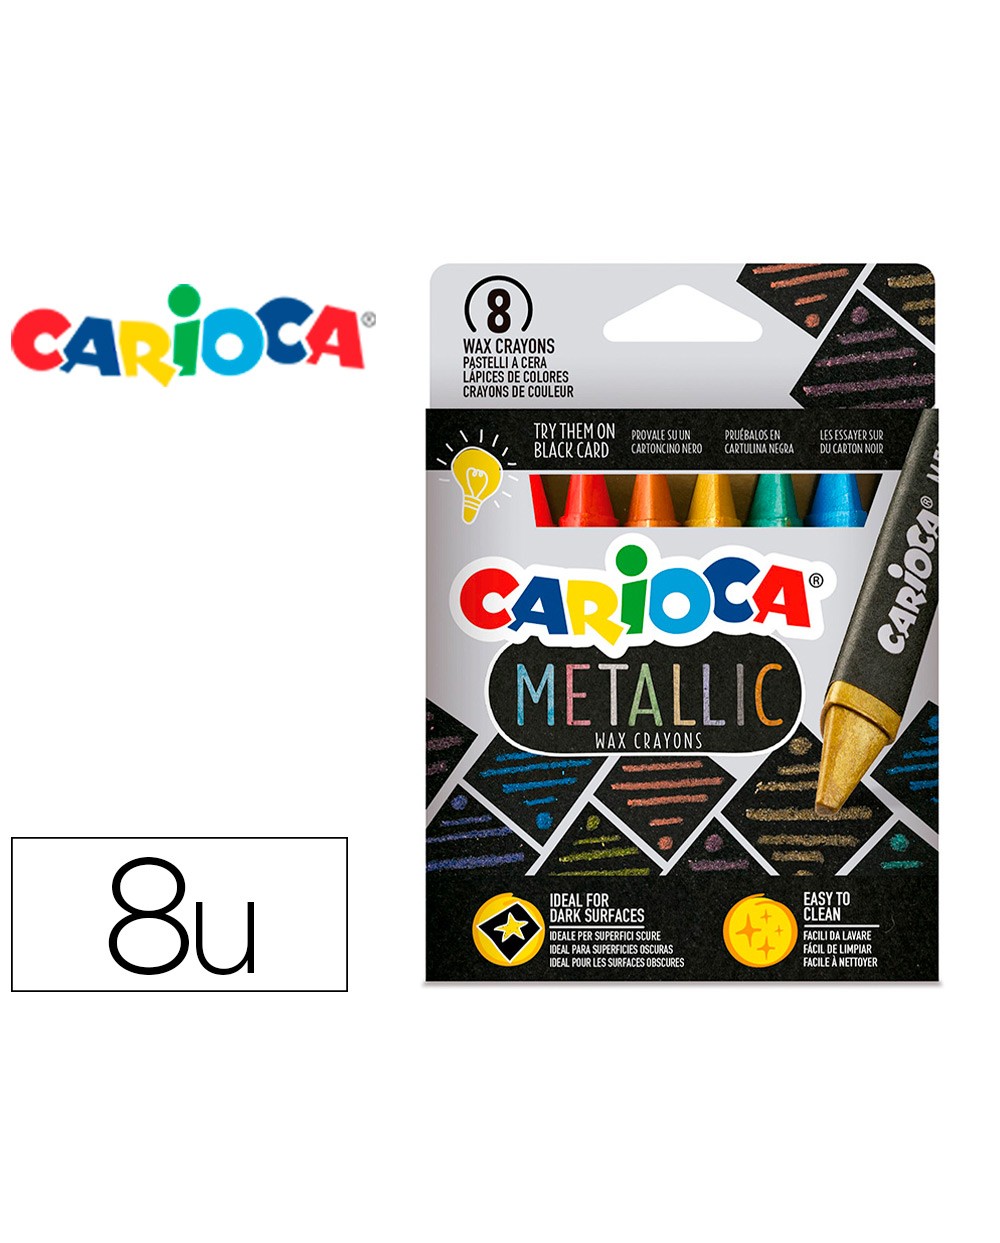 Lapices de cera carioca metallic triangular caja de 8 colores surtidos